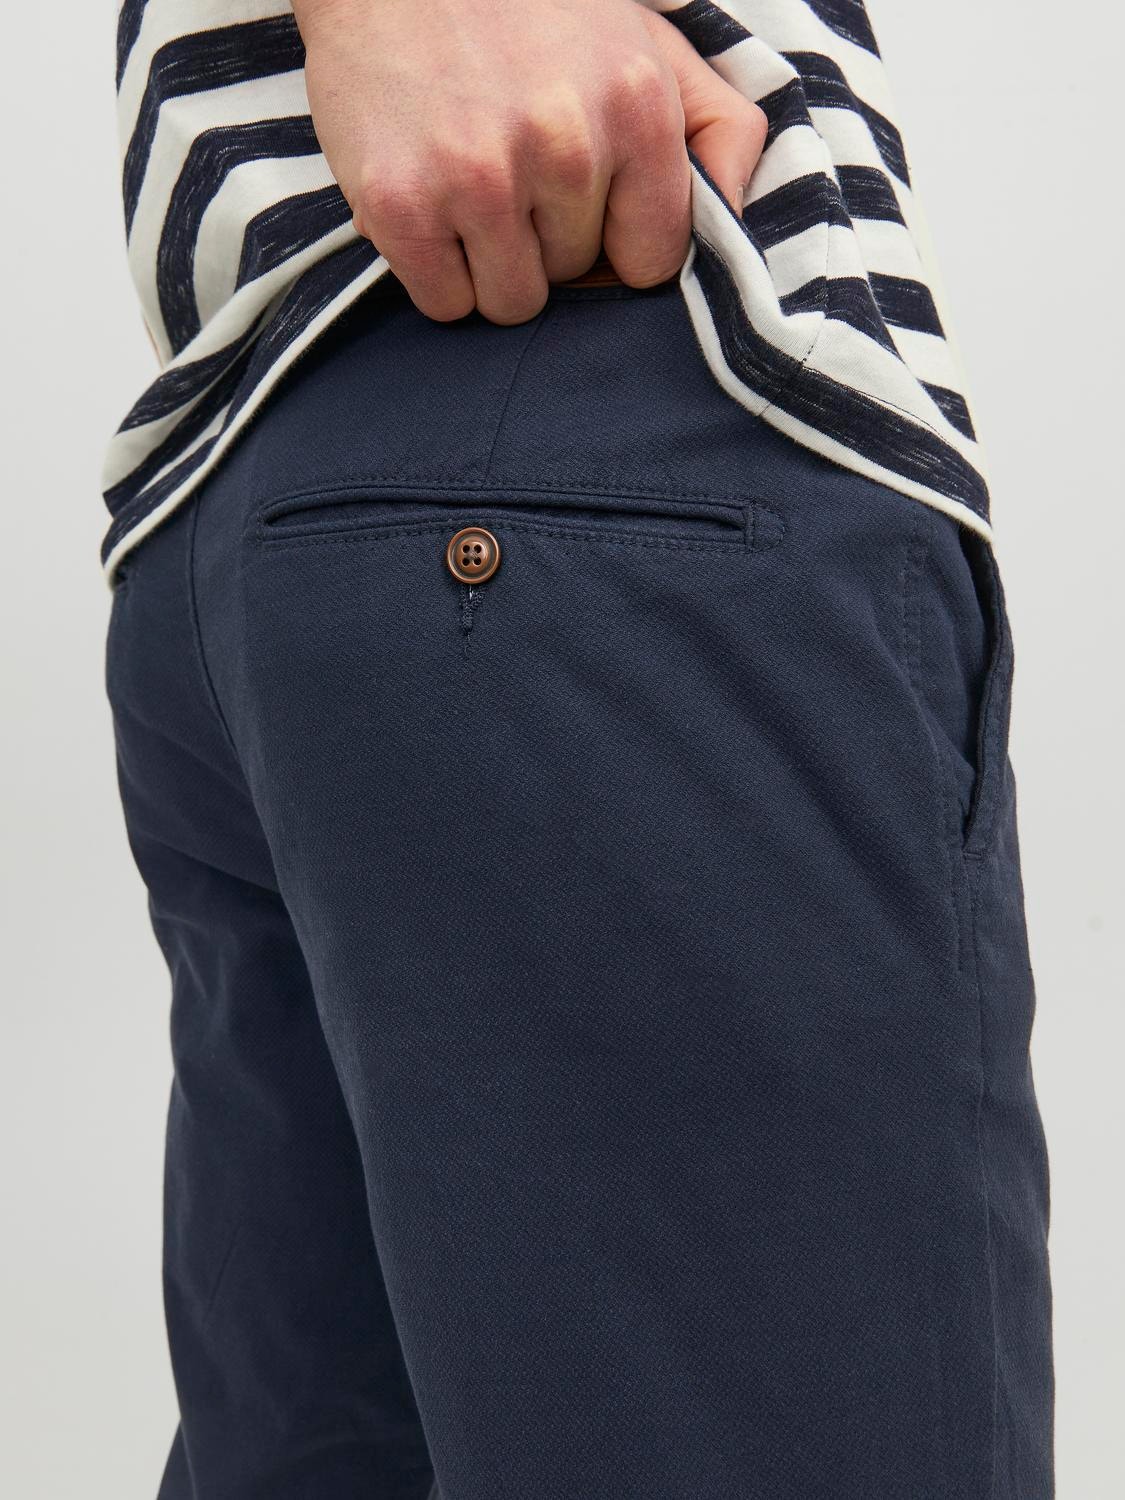 Jack & Jones Slim Fit Spodnie chino -Navy Blazer - 12206198